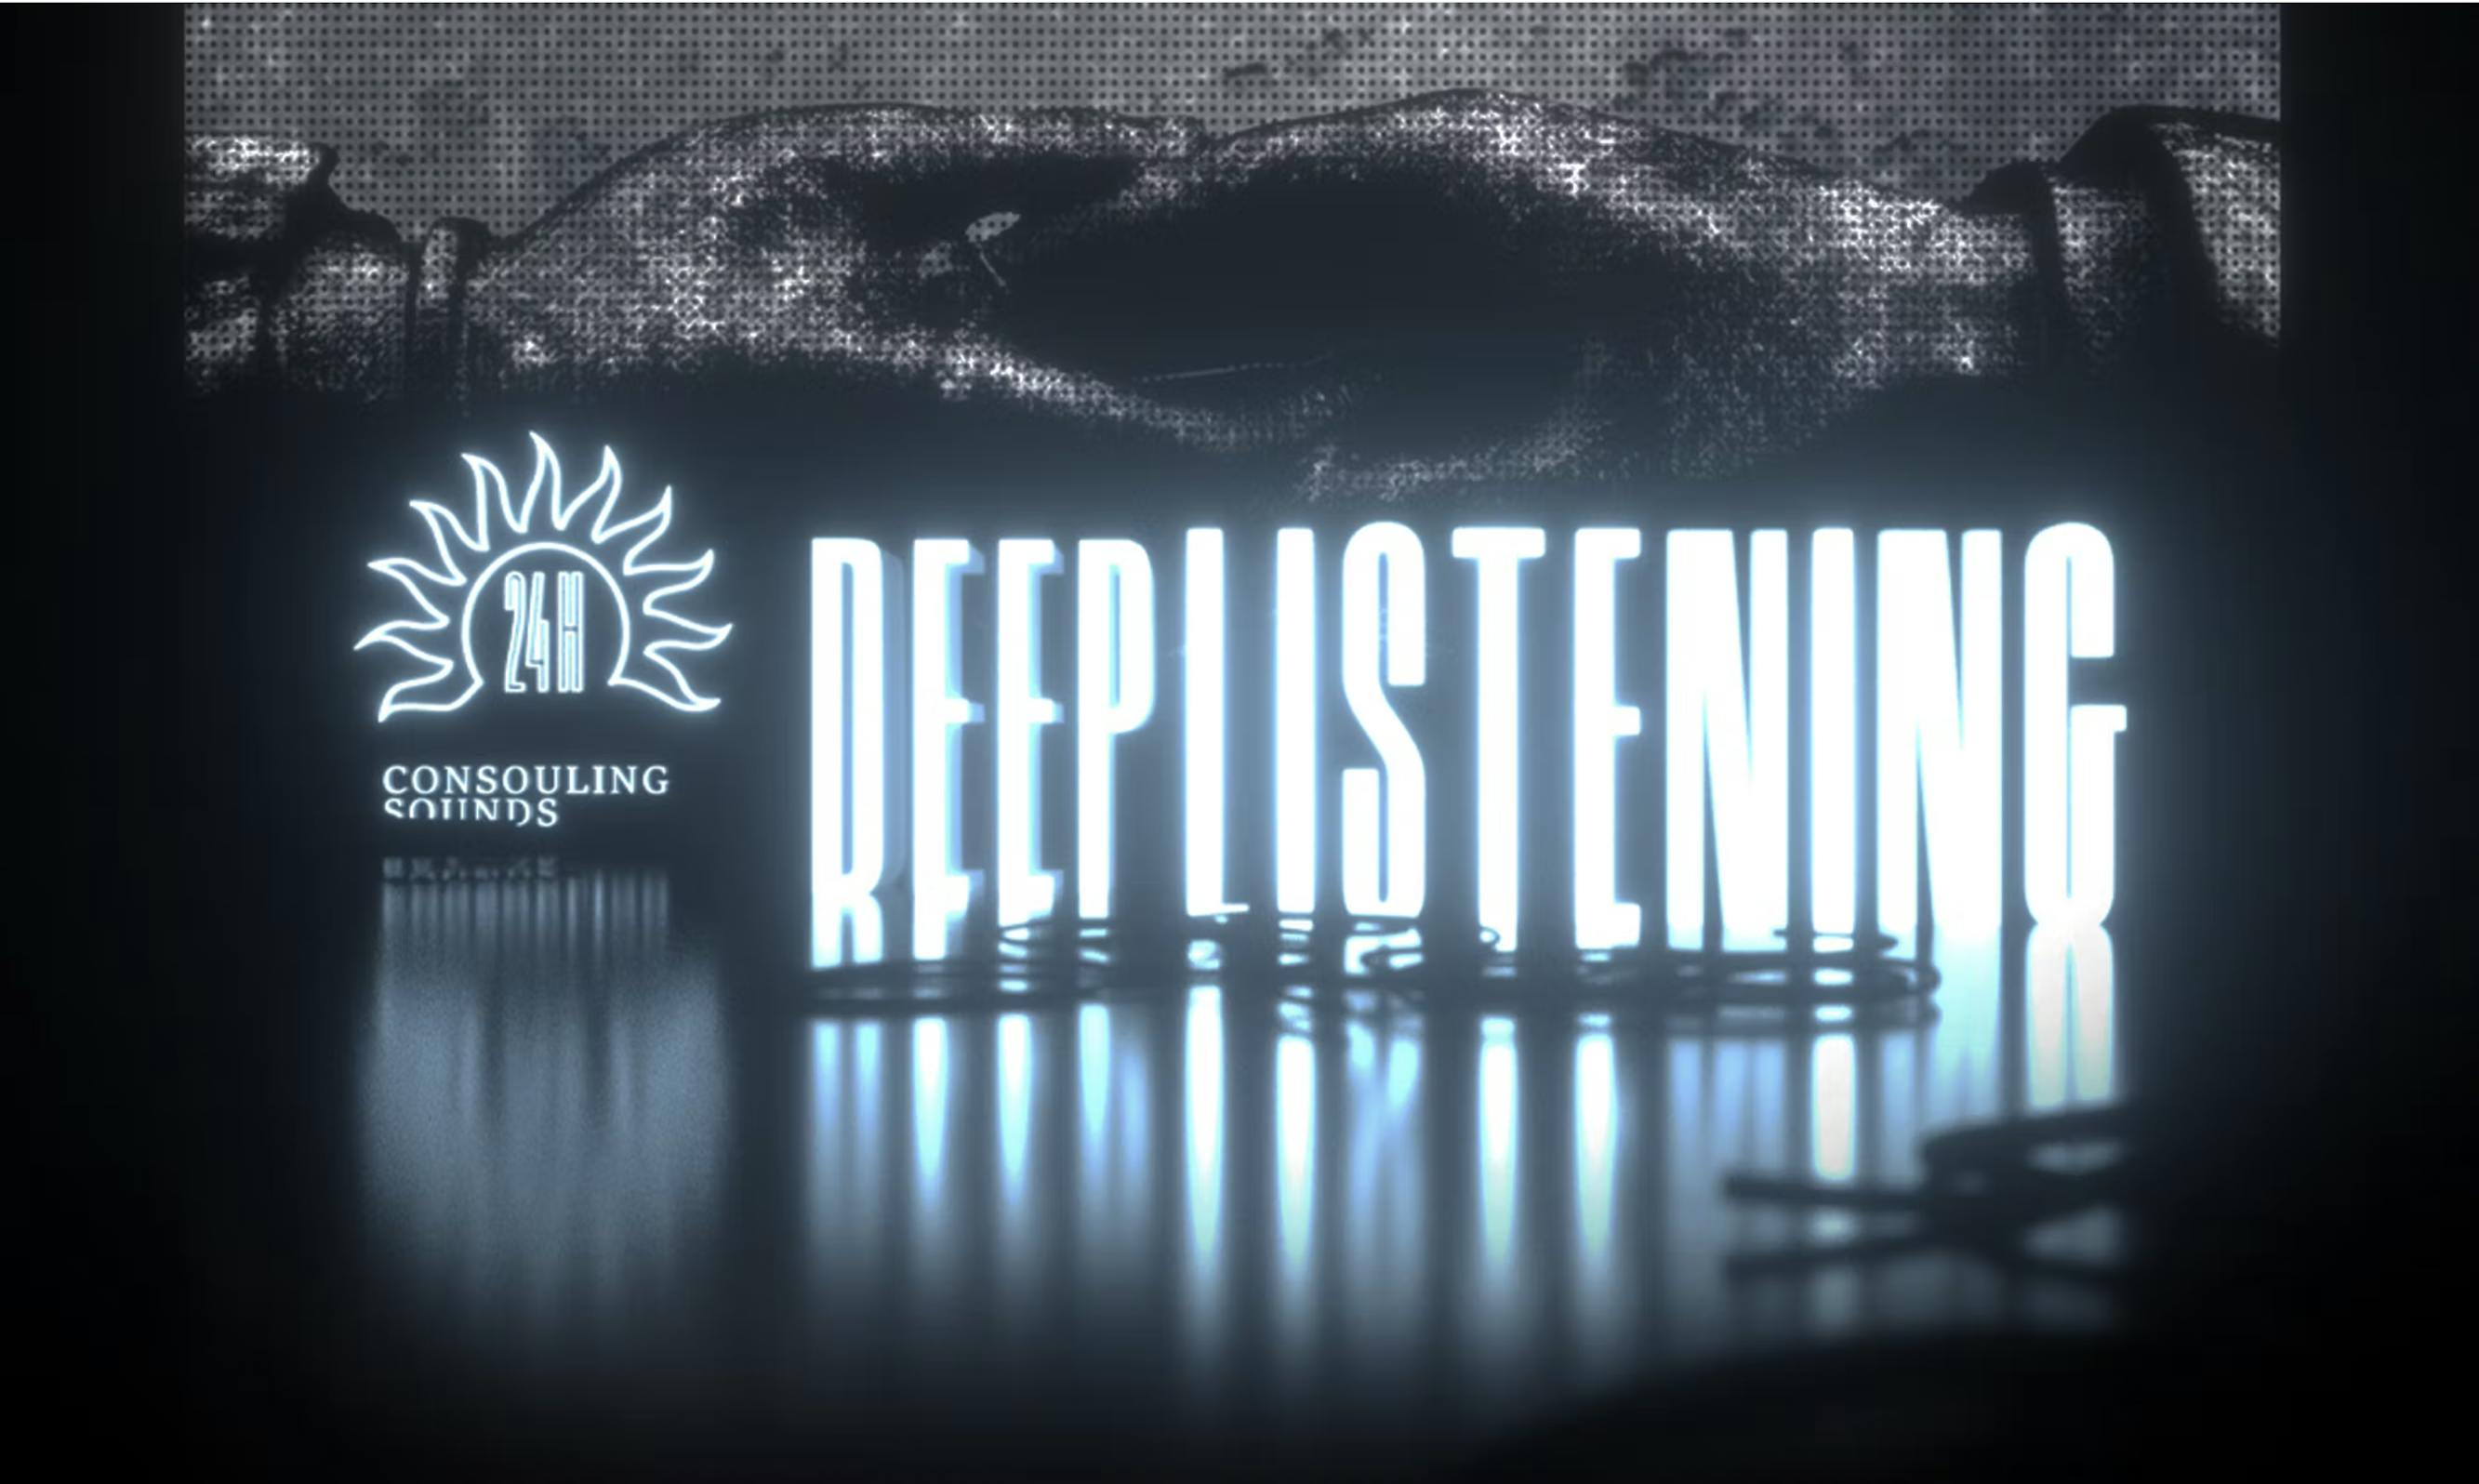 Consouling Sounds verloot testpressings ten voordele van Deep Listening Festival